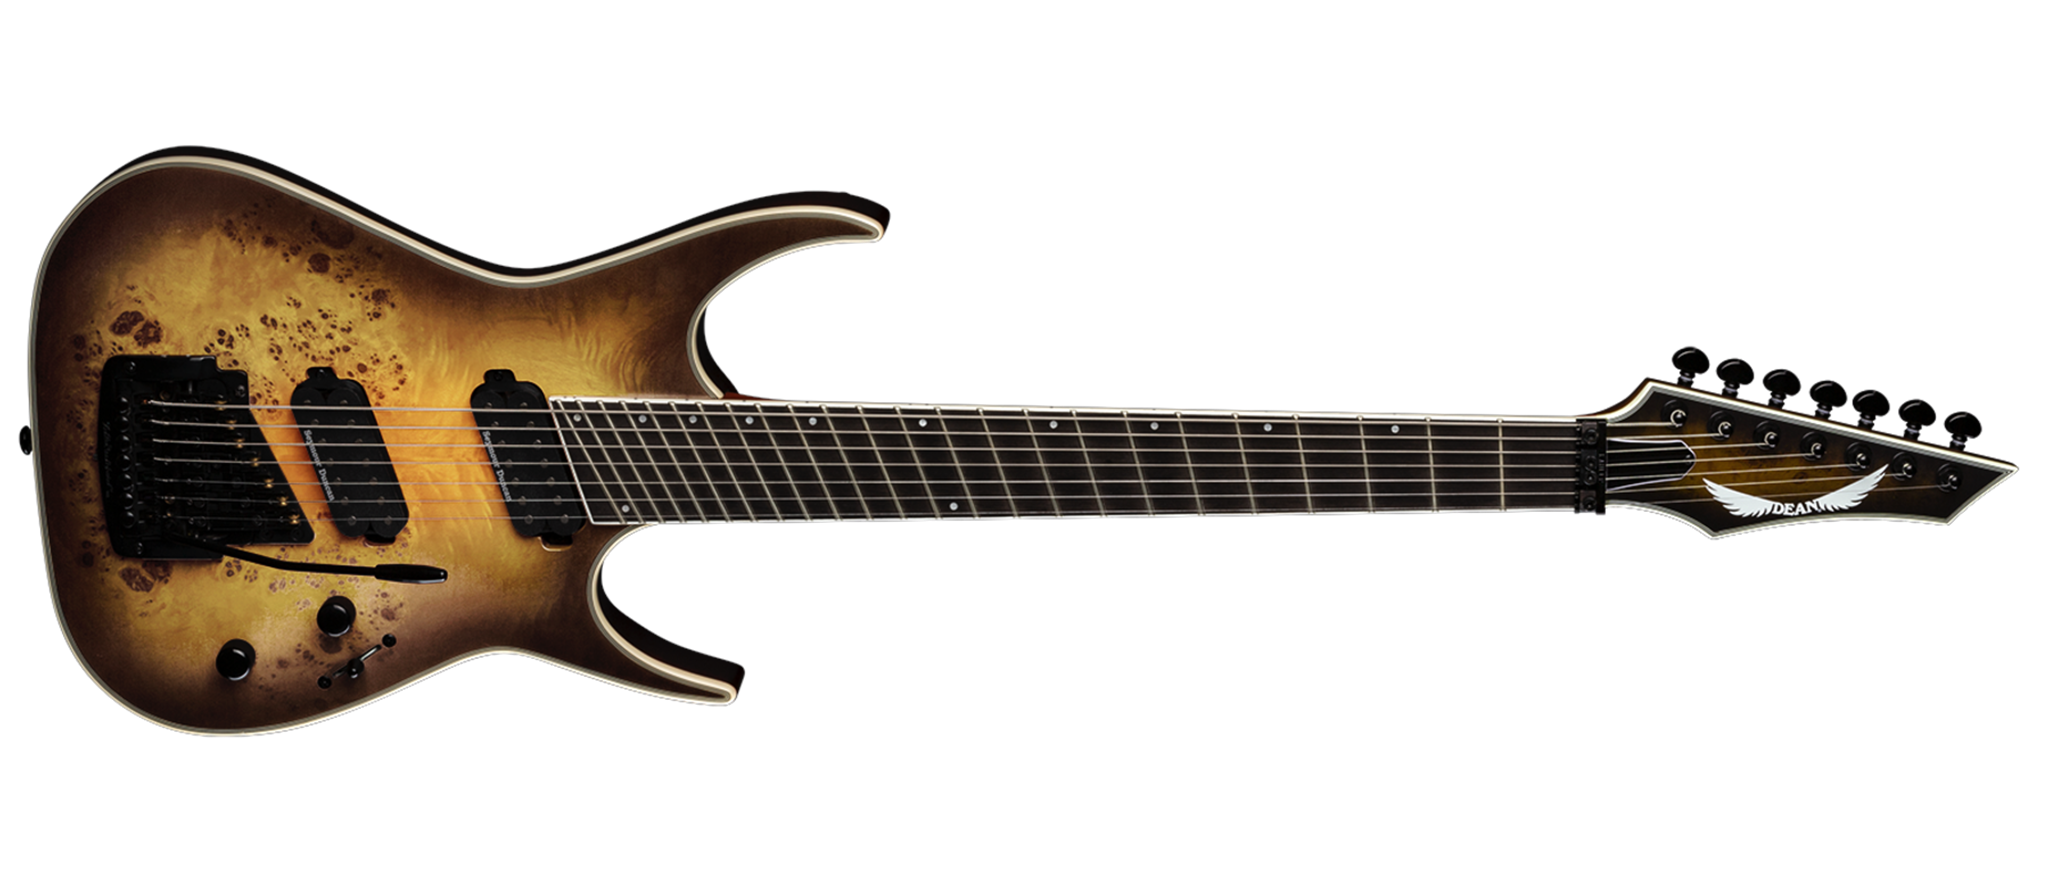 Dean EXILE   Select-7 Multiscale Kahler  Burl Maple 7-String Electric Guitar 